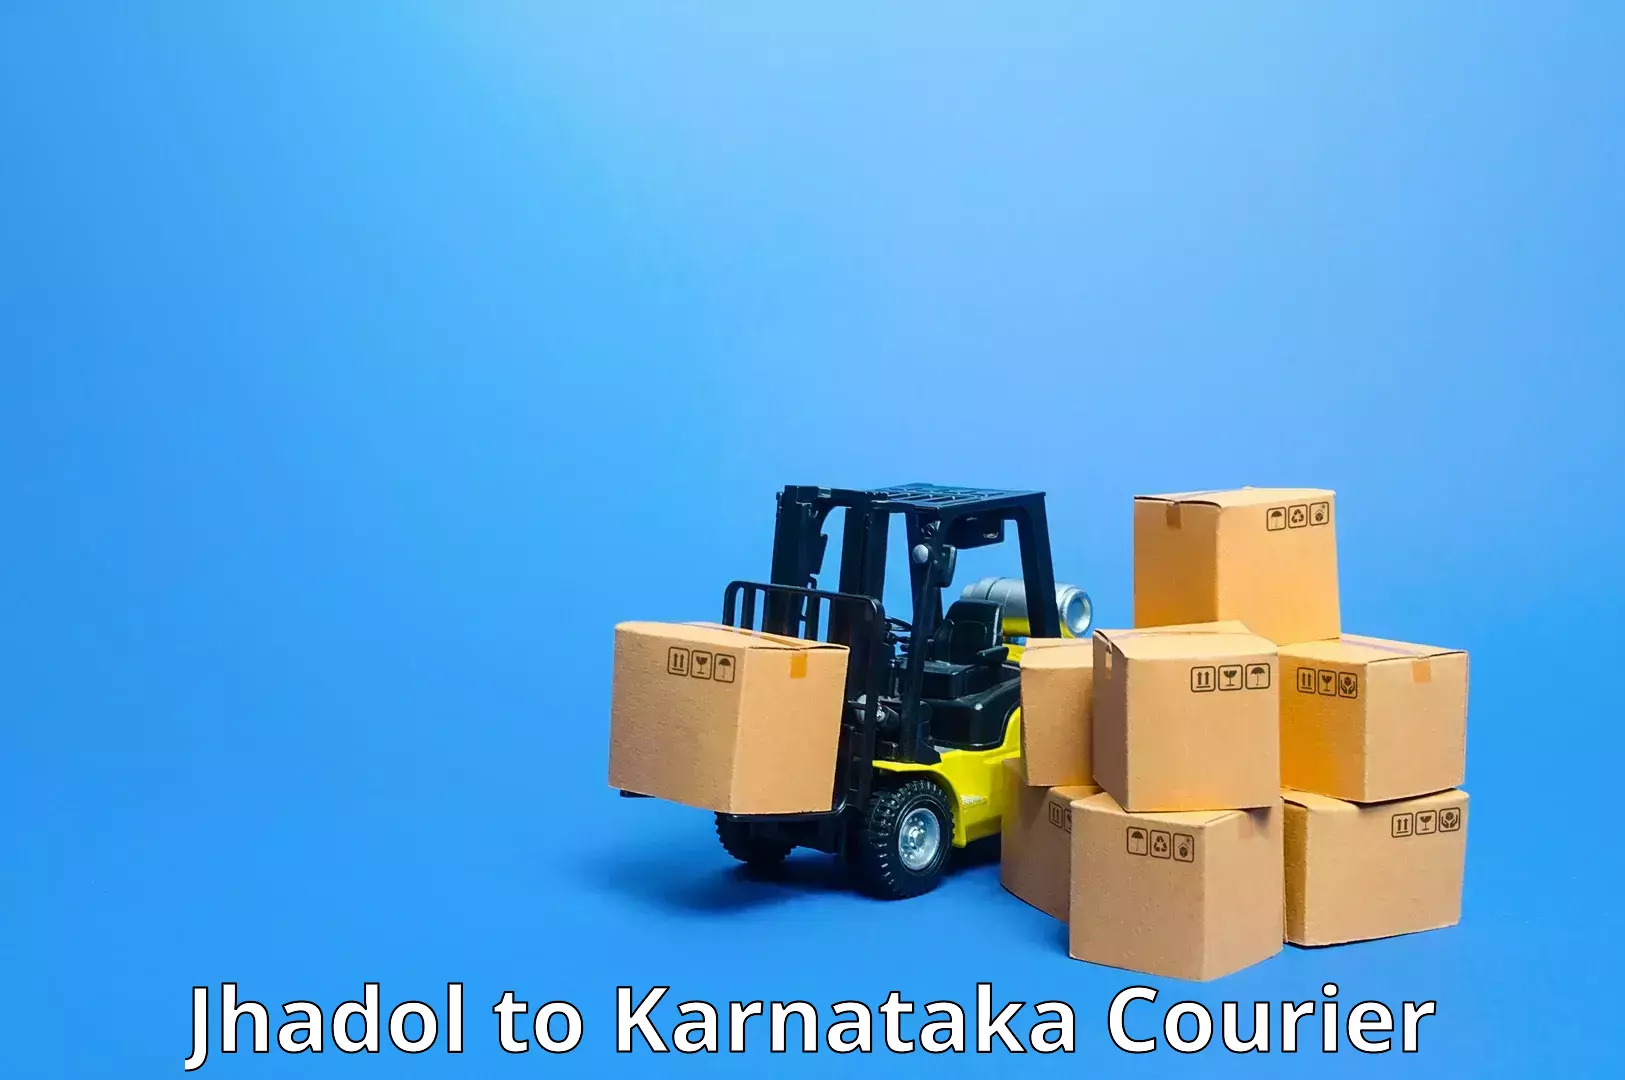 Tech-enabled shipping Jhadol to Mundgod